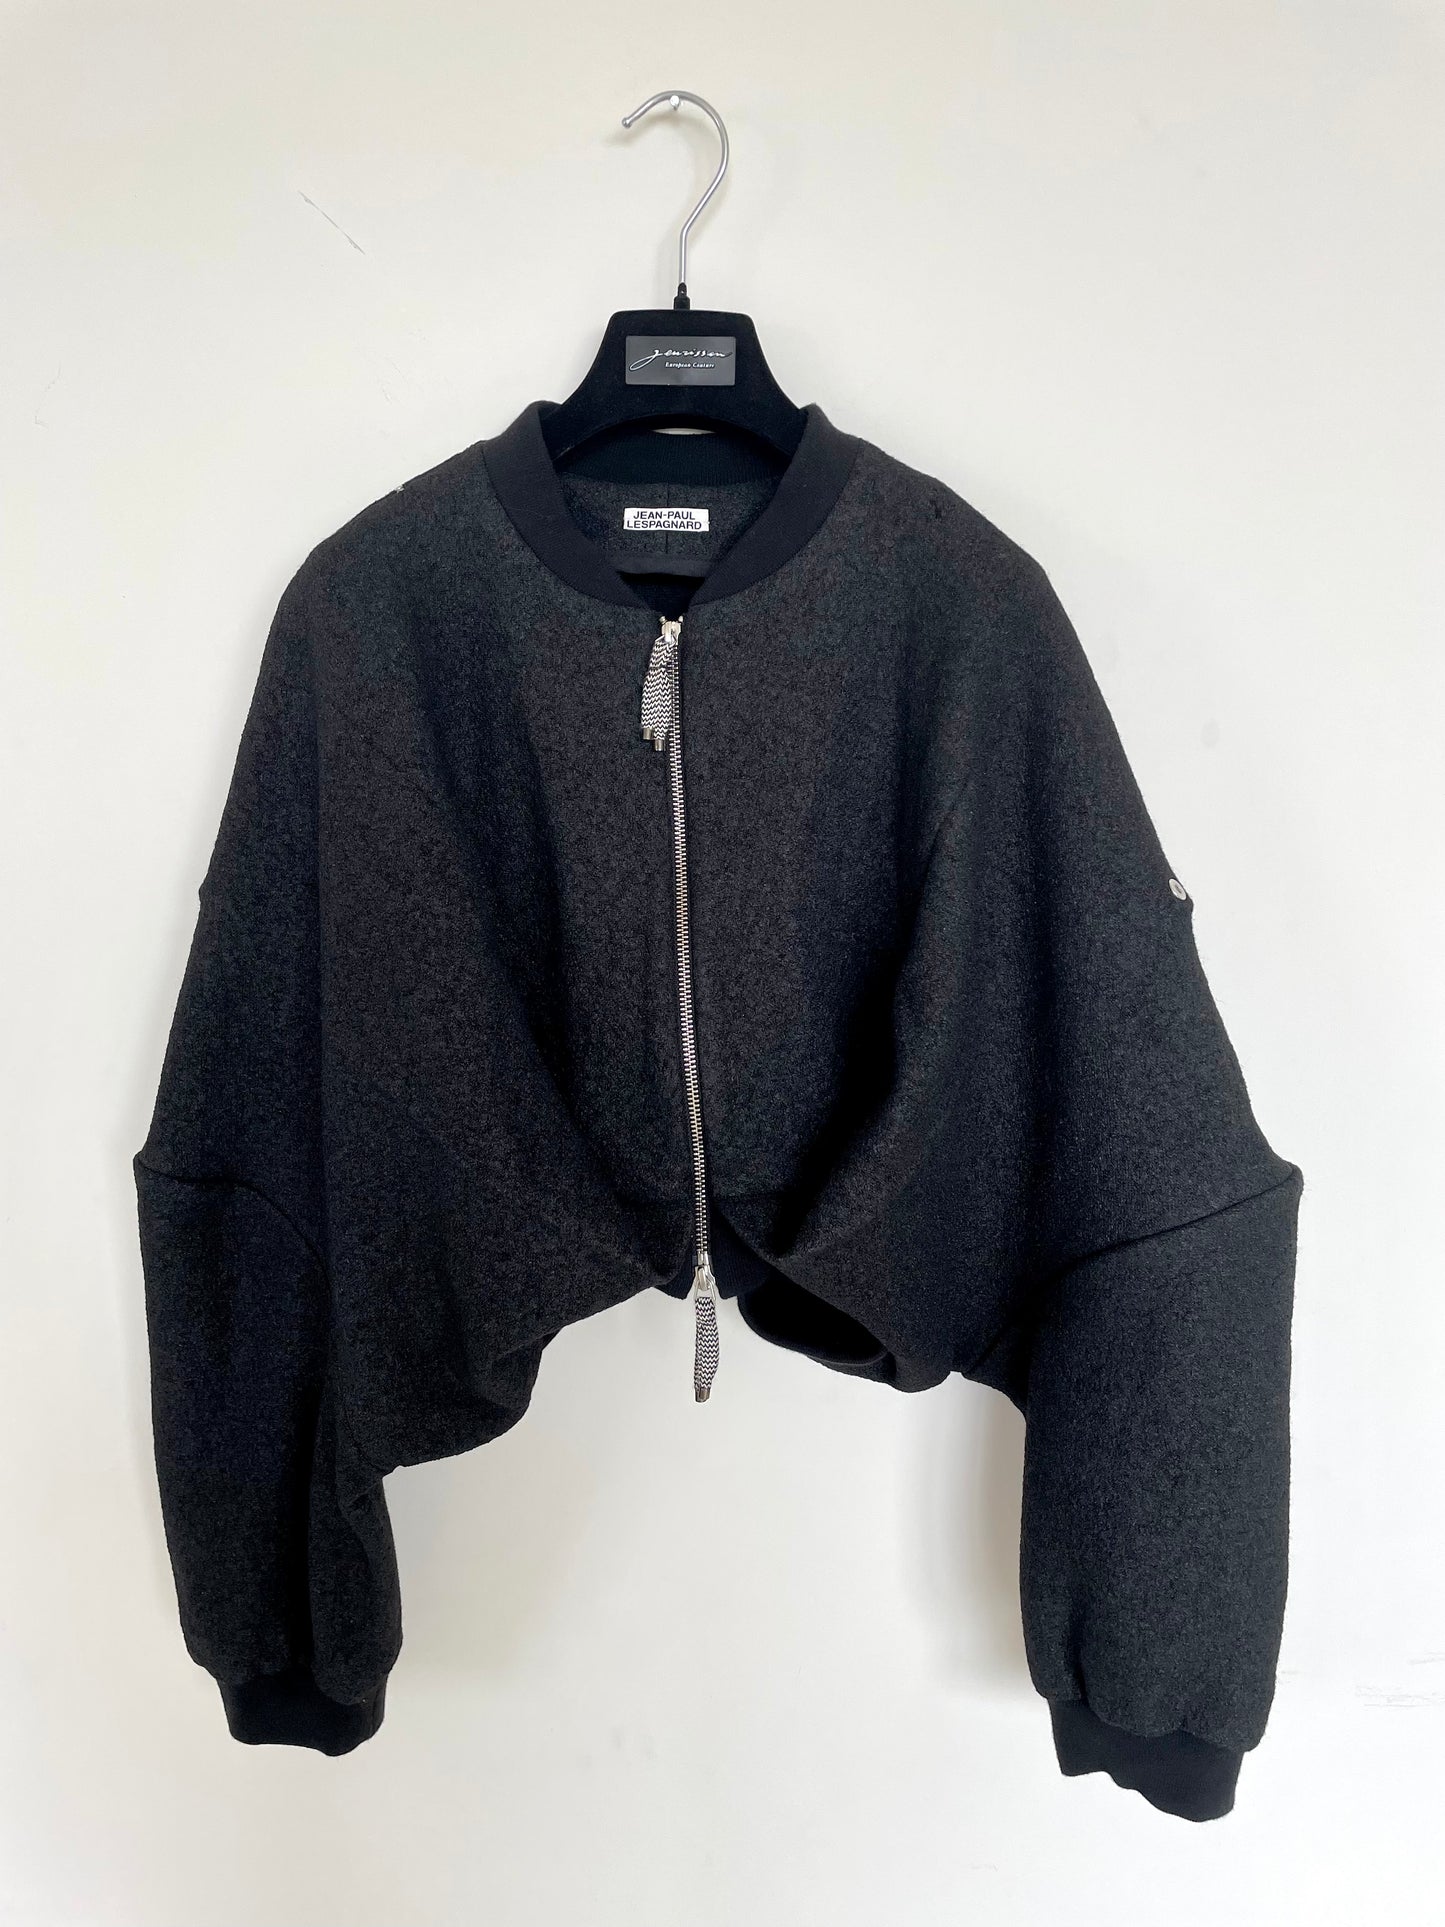 Jean-Paul Lespagnard Cropped transformable black knit bomber jacket with "asphalt" coating